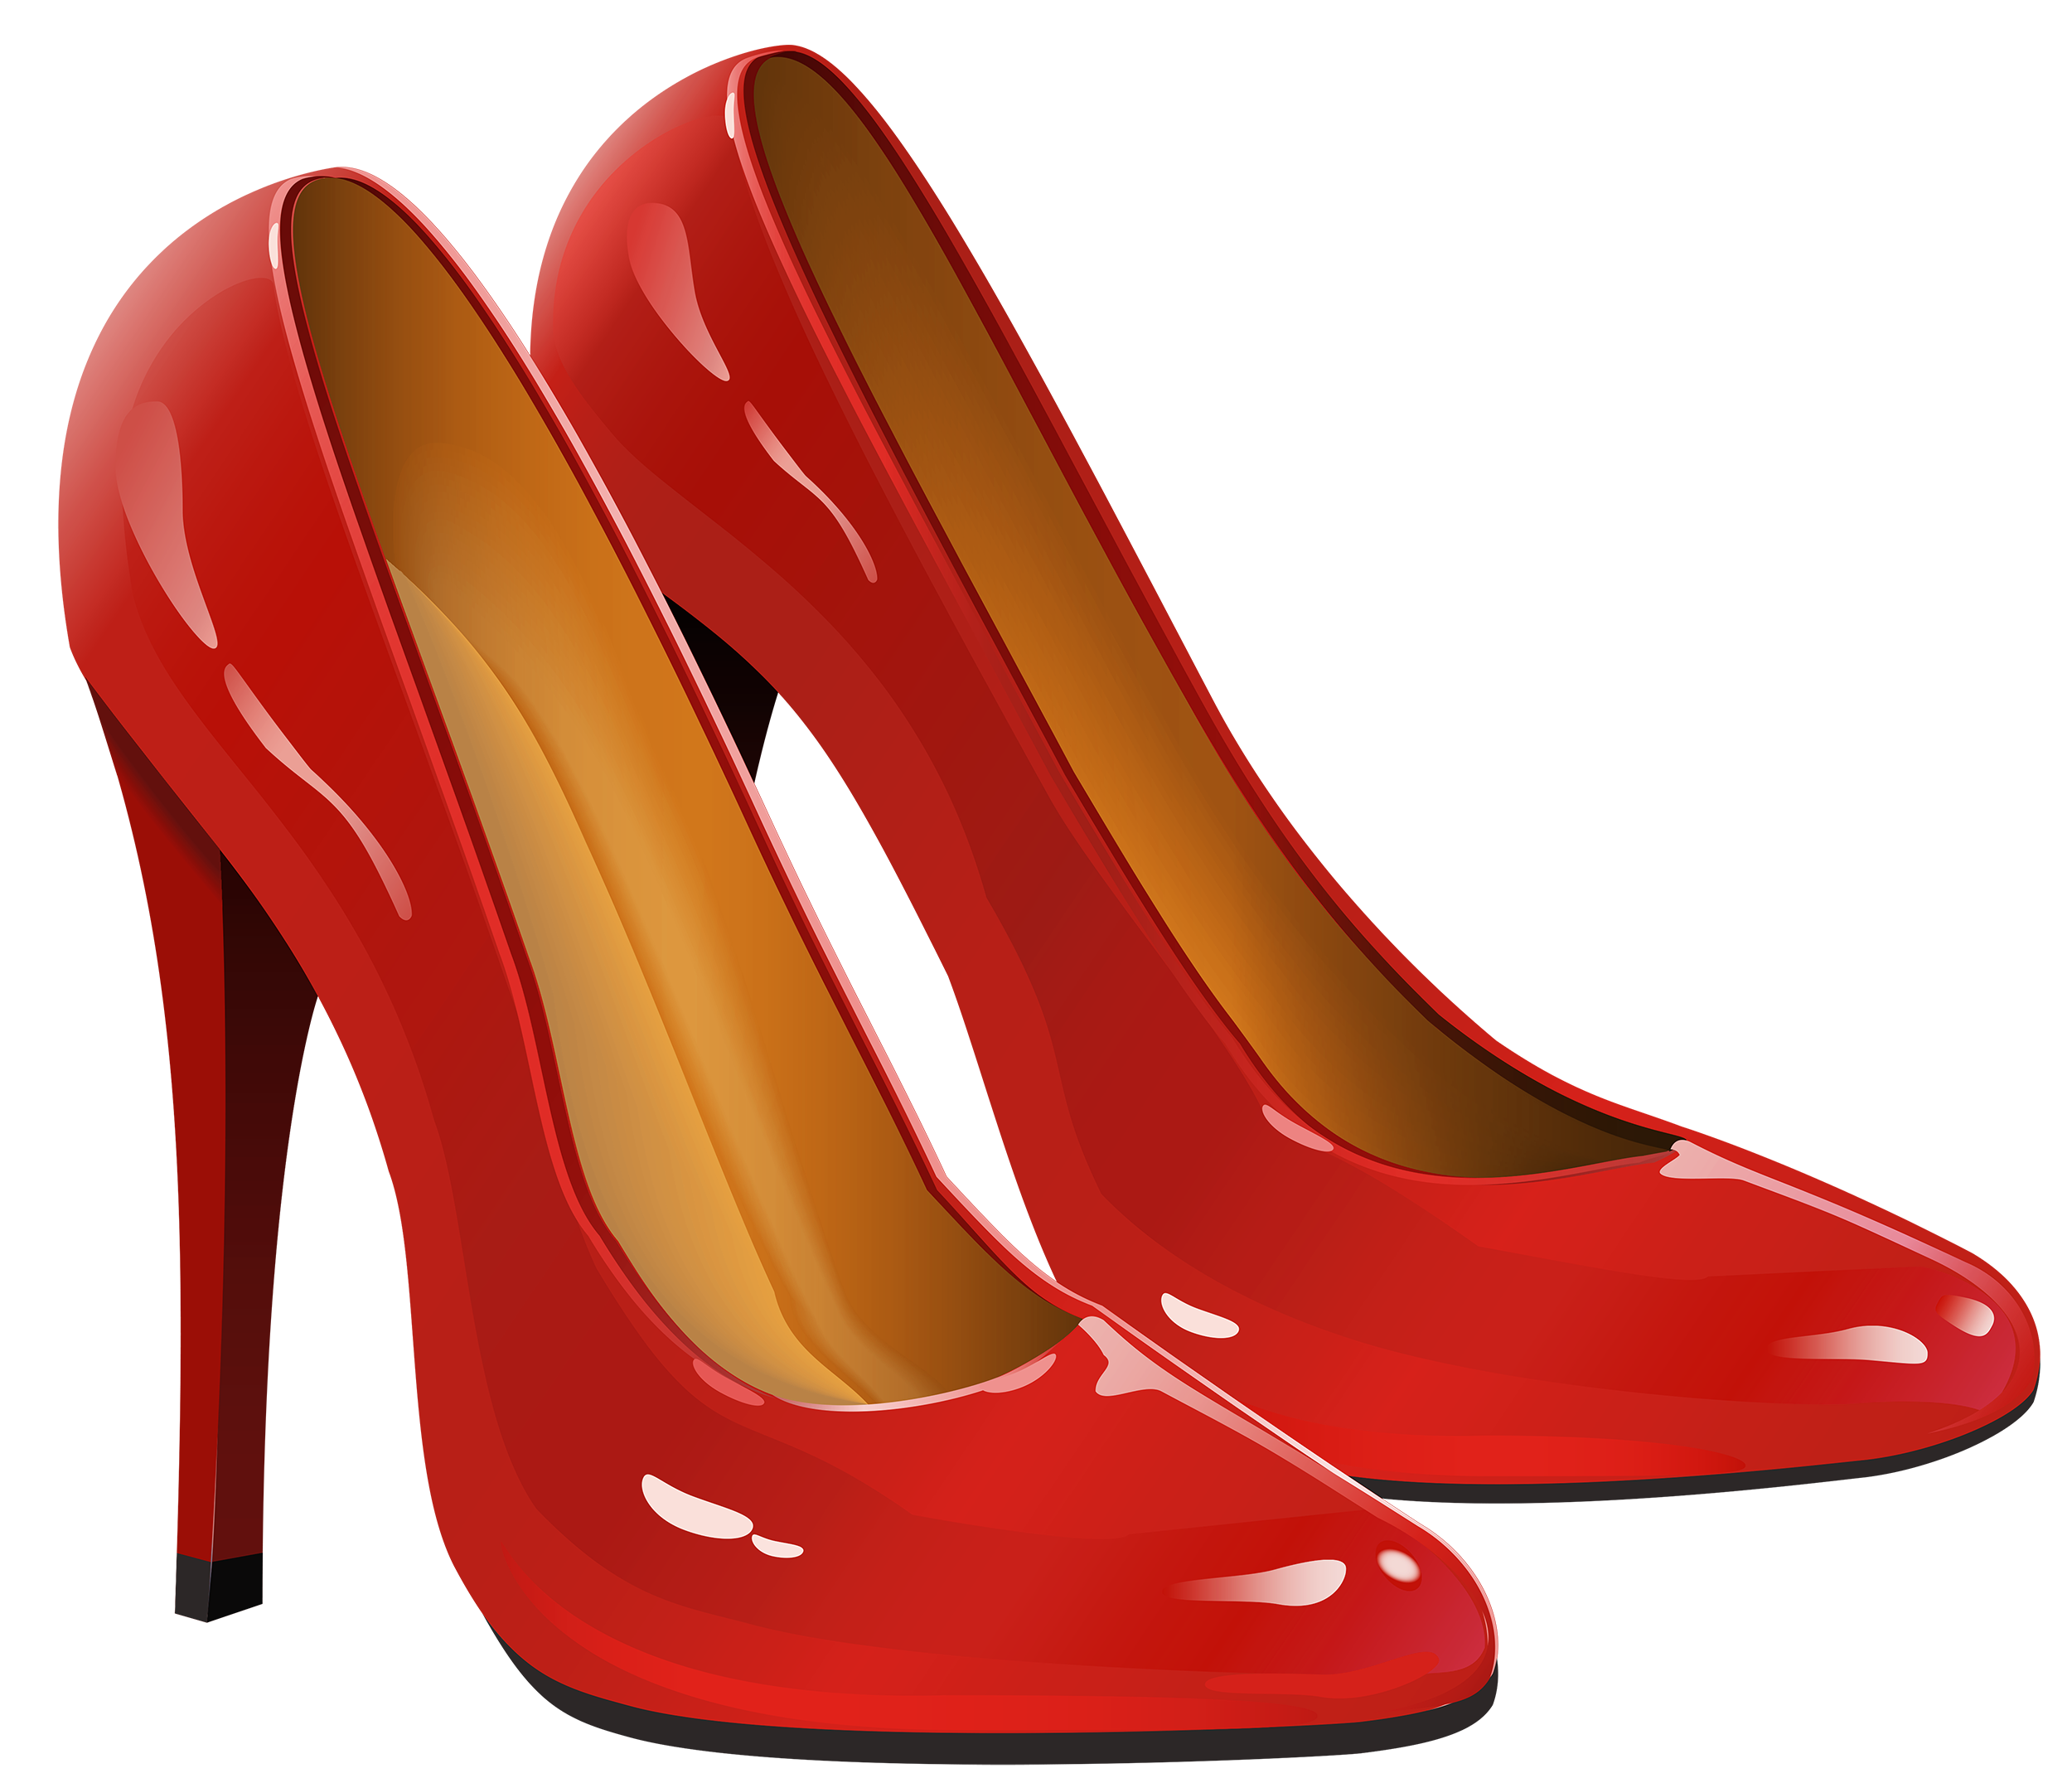 Zapatos de mujer roja PNG imagen Transparente